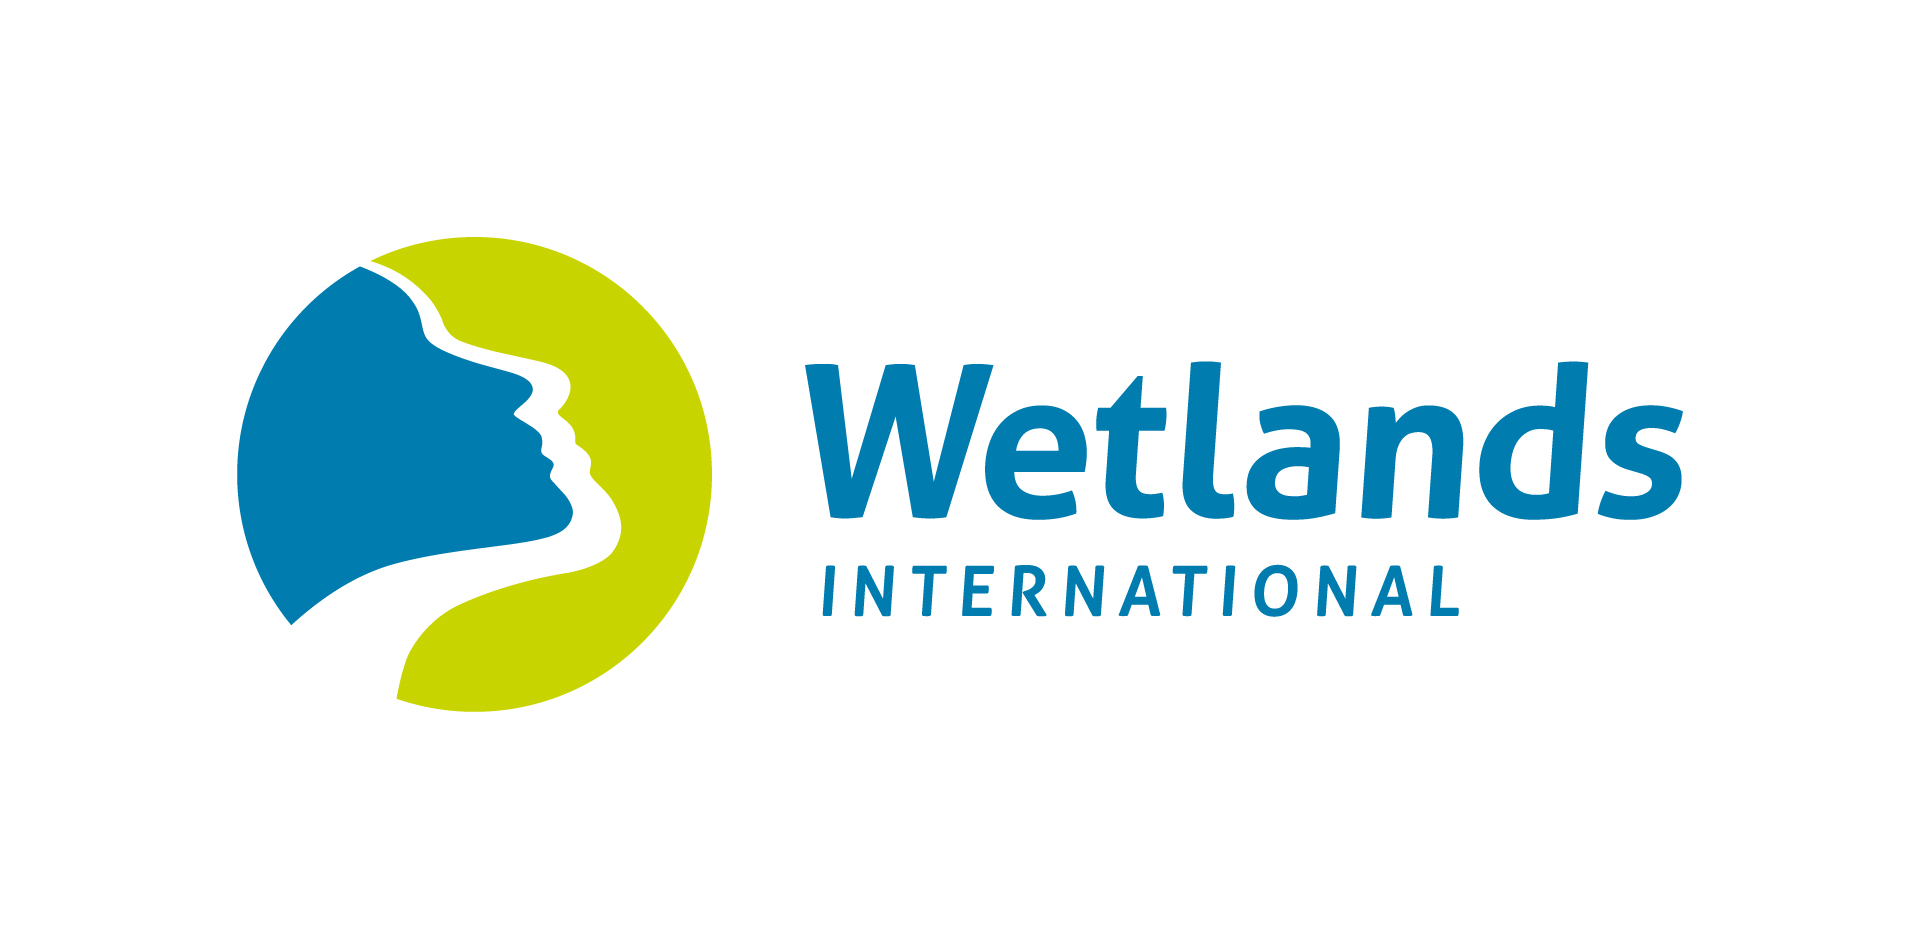 Wetlands International logo